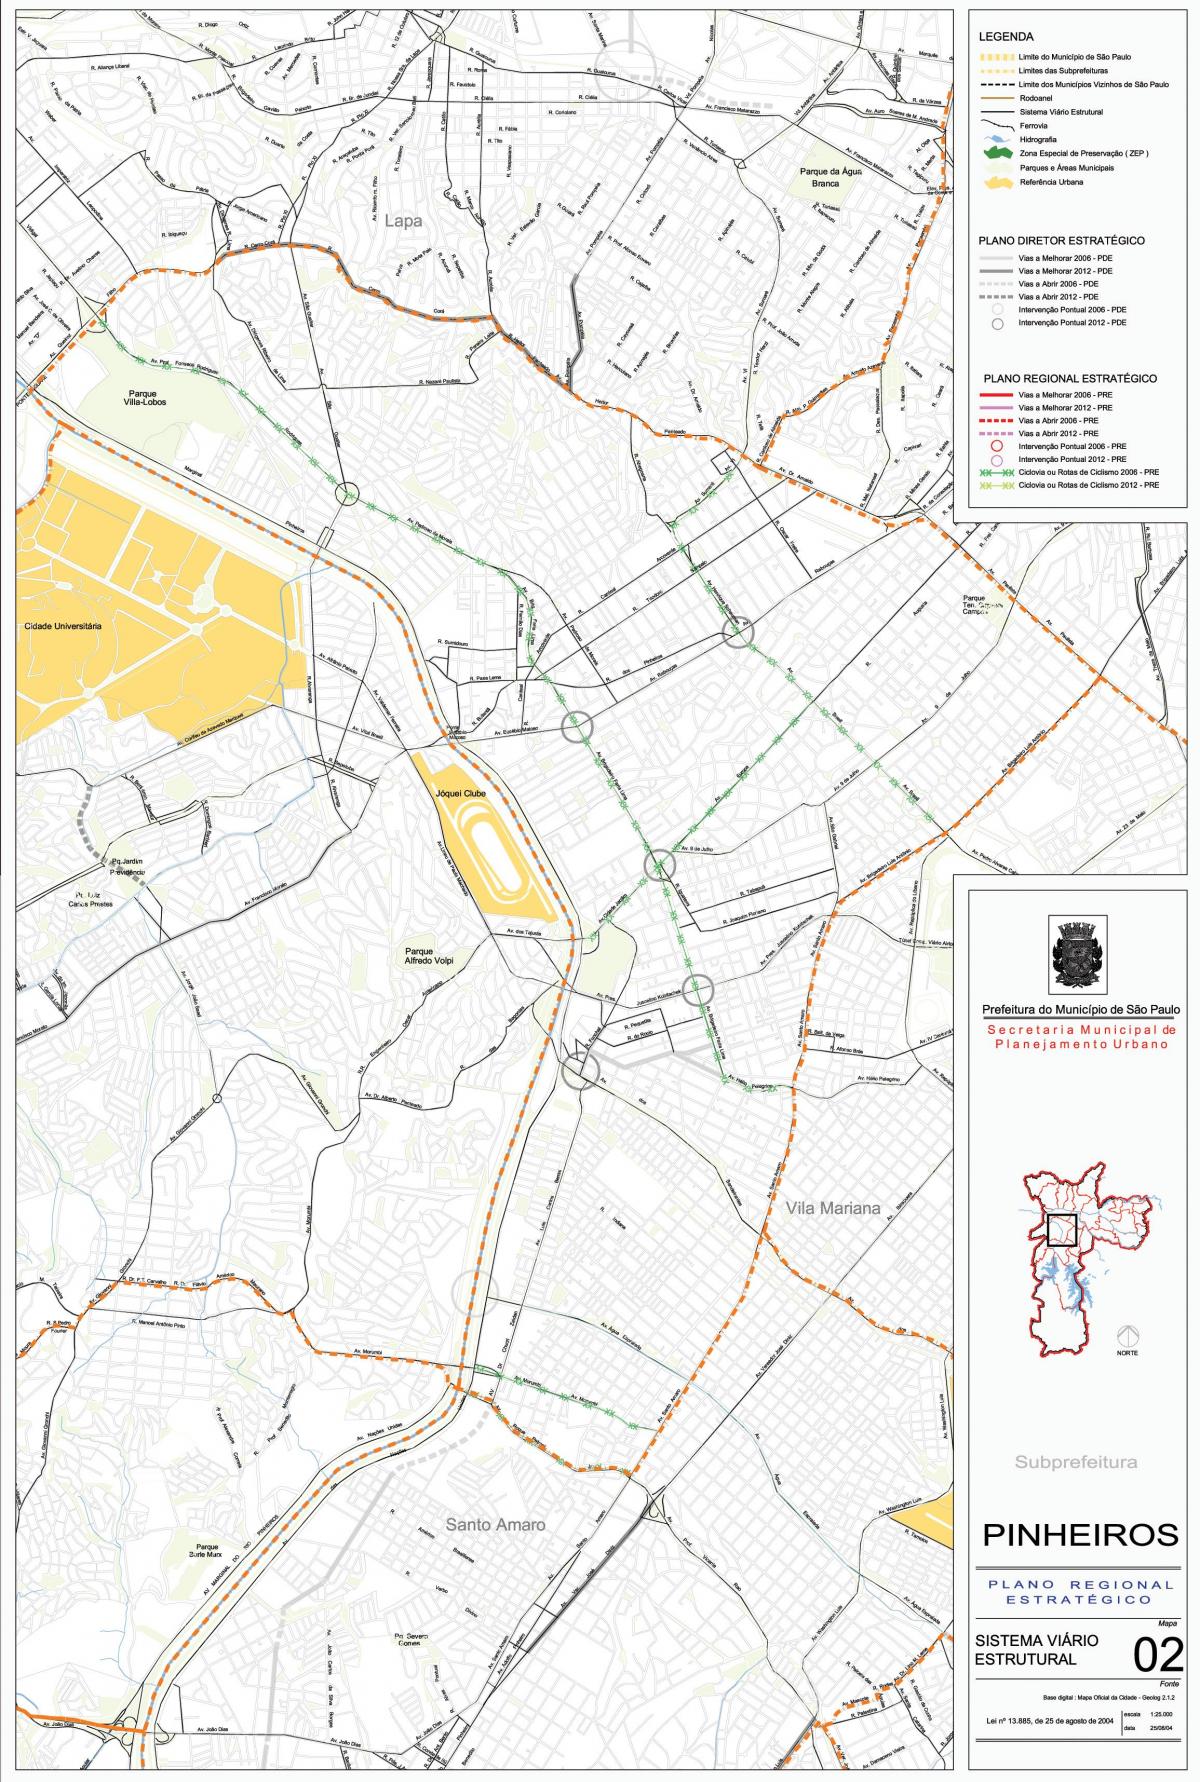 Mappa di São Paulo Pinheiros - Strade